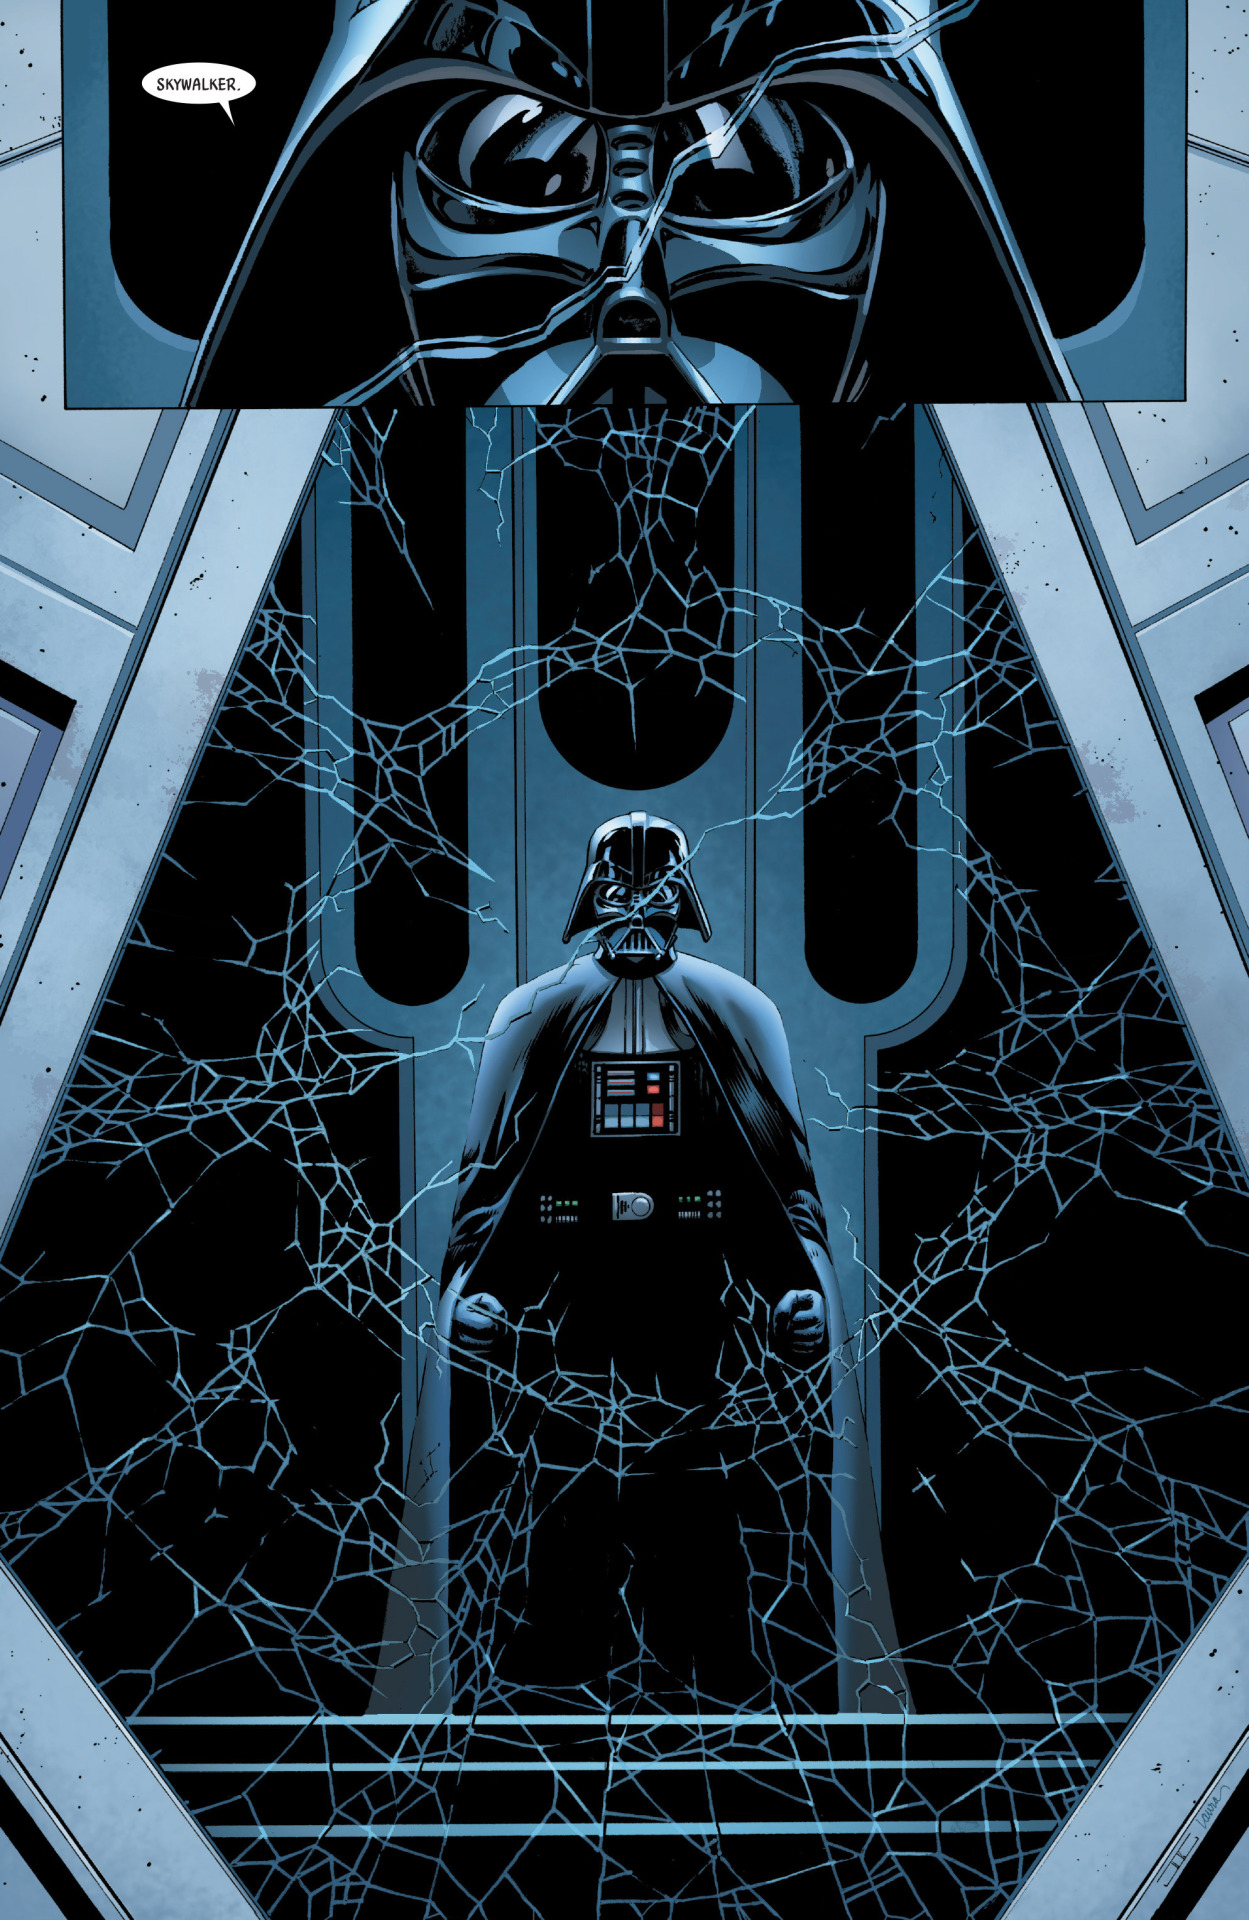 Darth Vader Learns The Truth (Star Wars #6/Darth Vader #6)